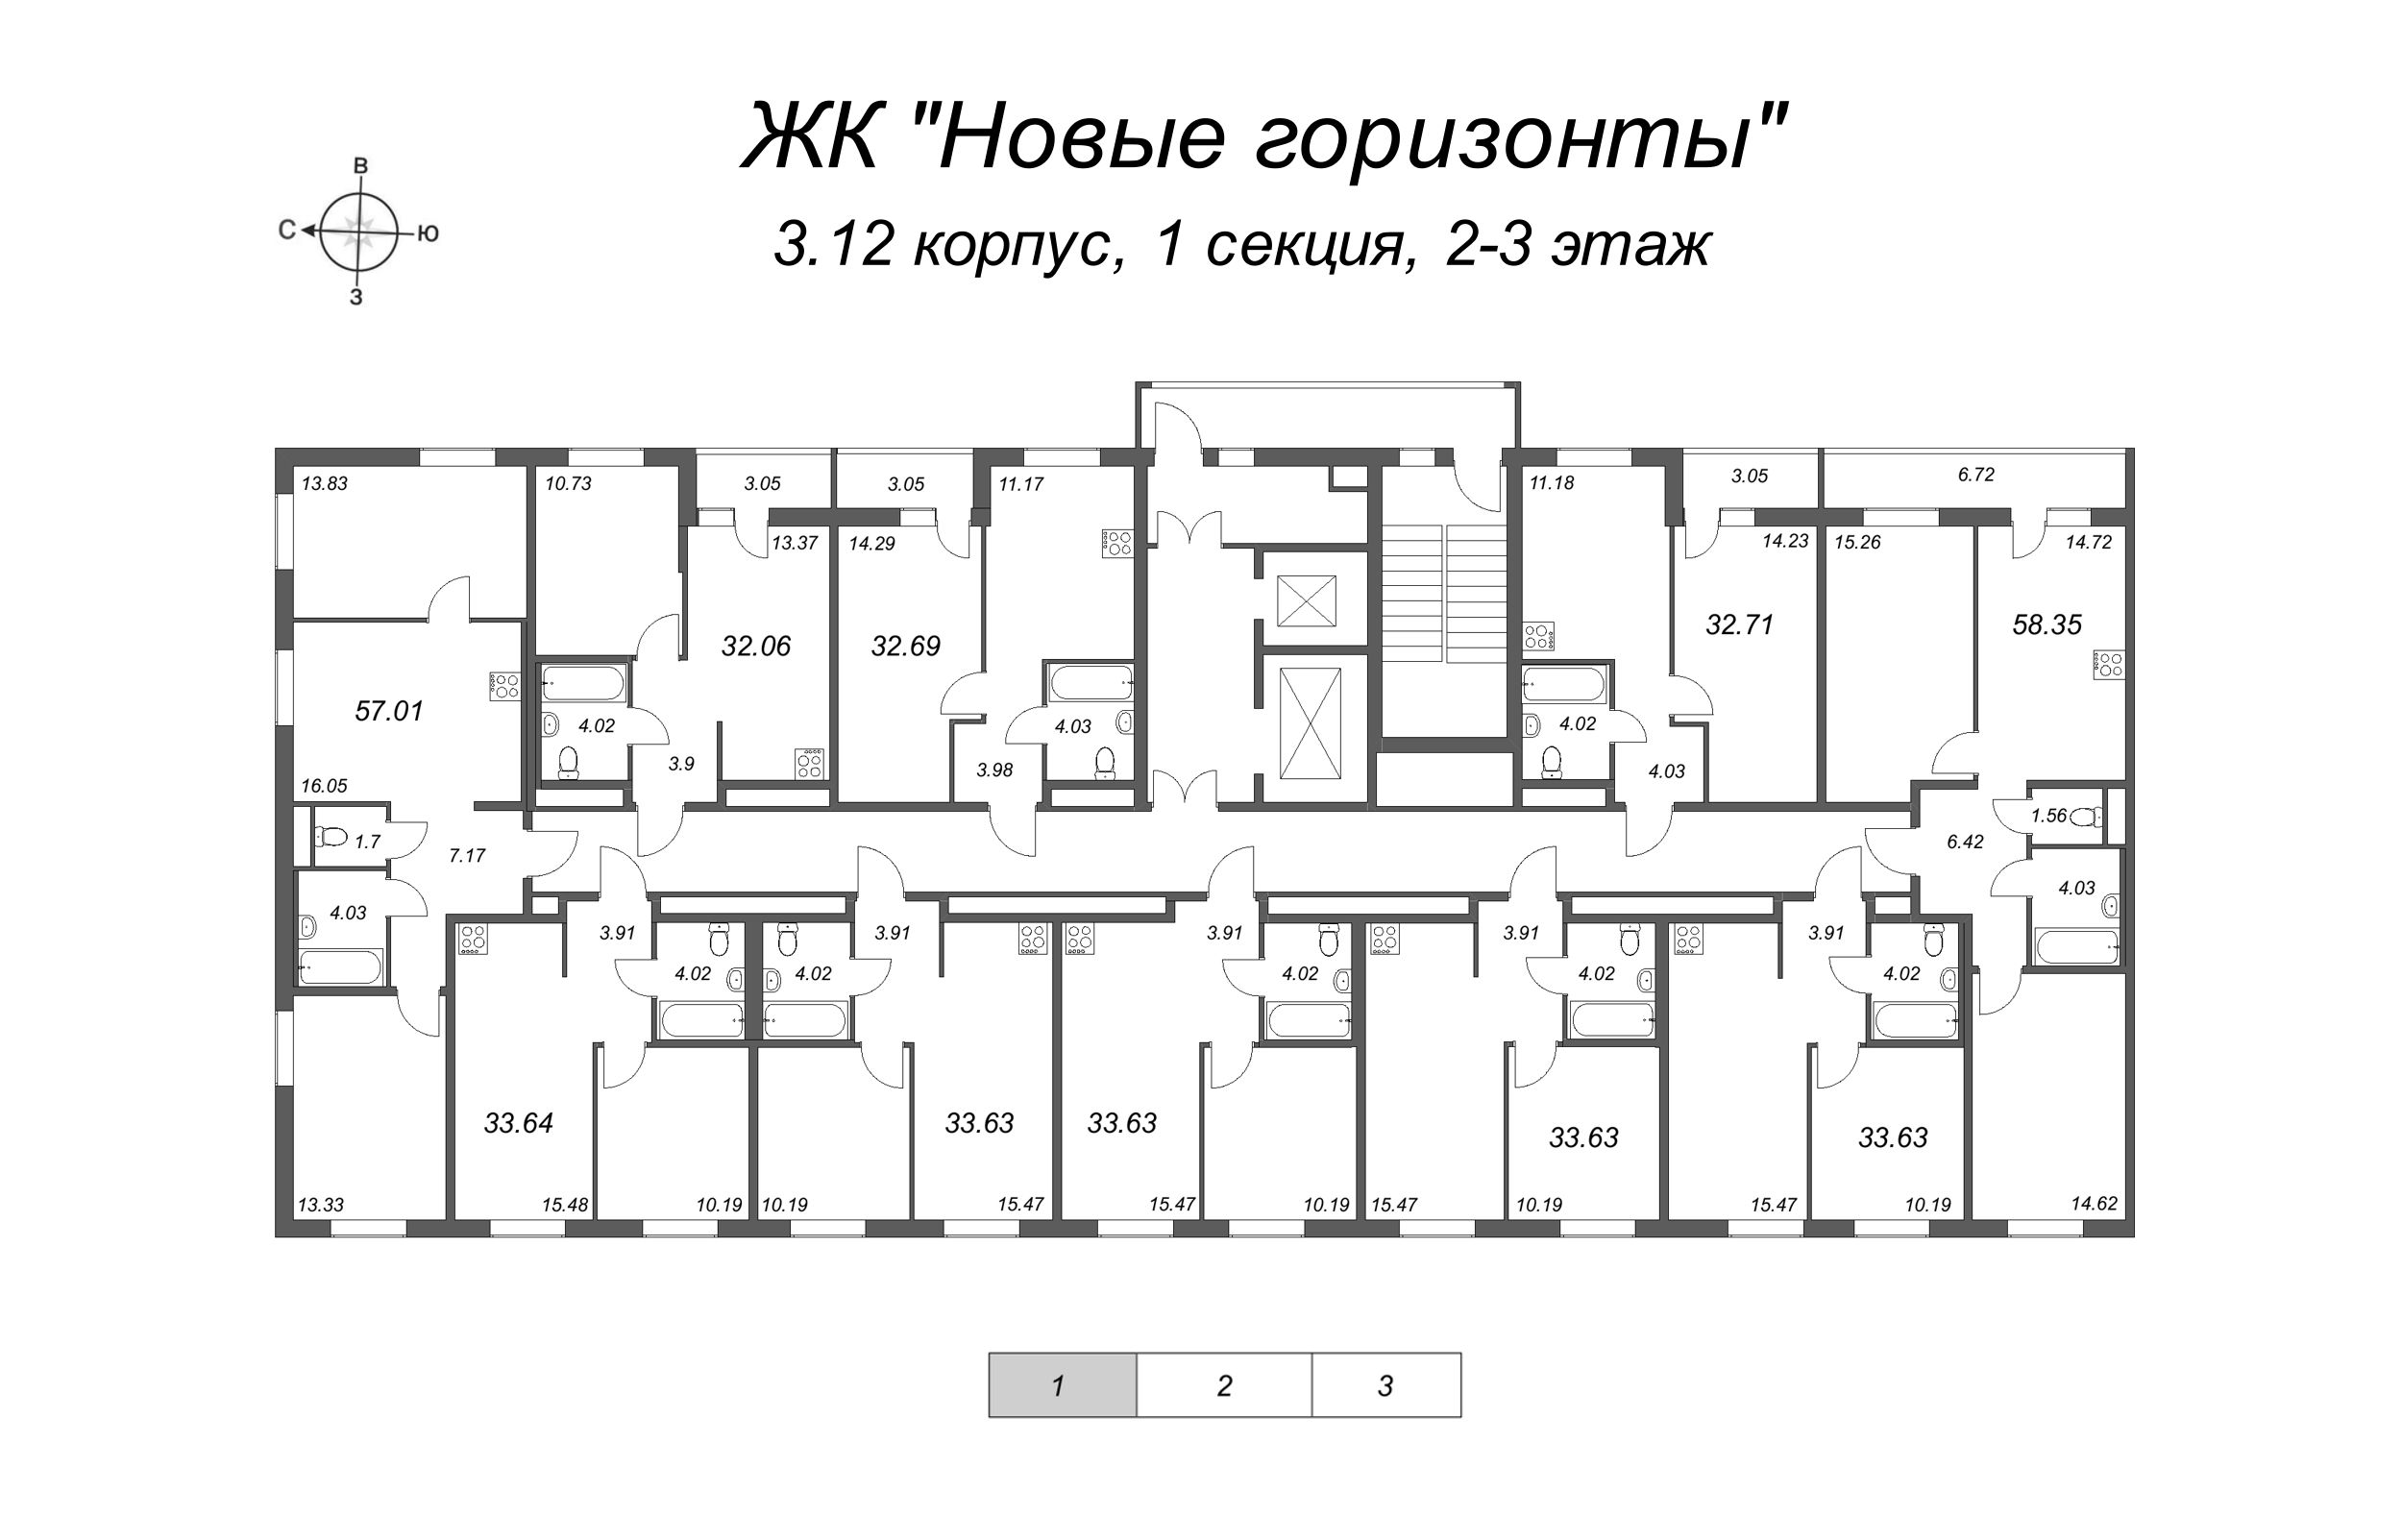 2-комнатная (Евро) квартира, 33.64 м² - планировка этажа